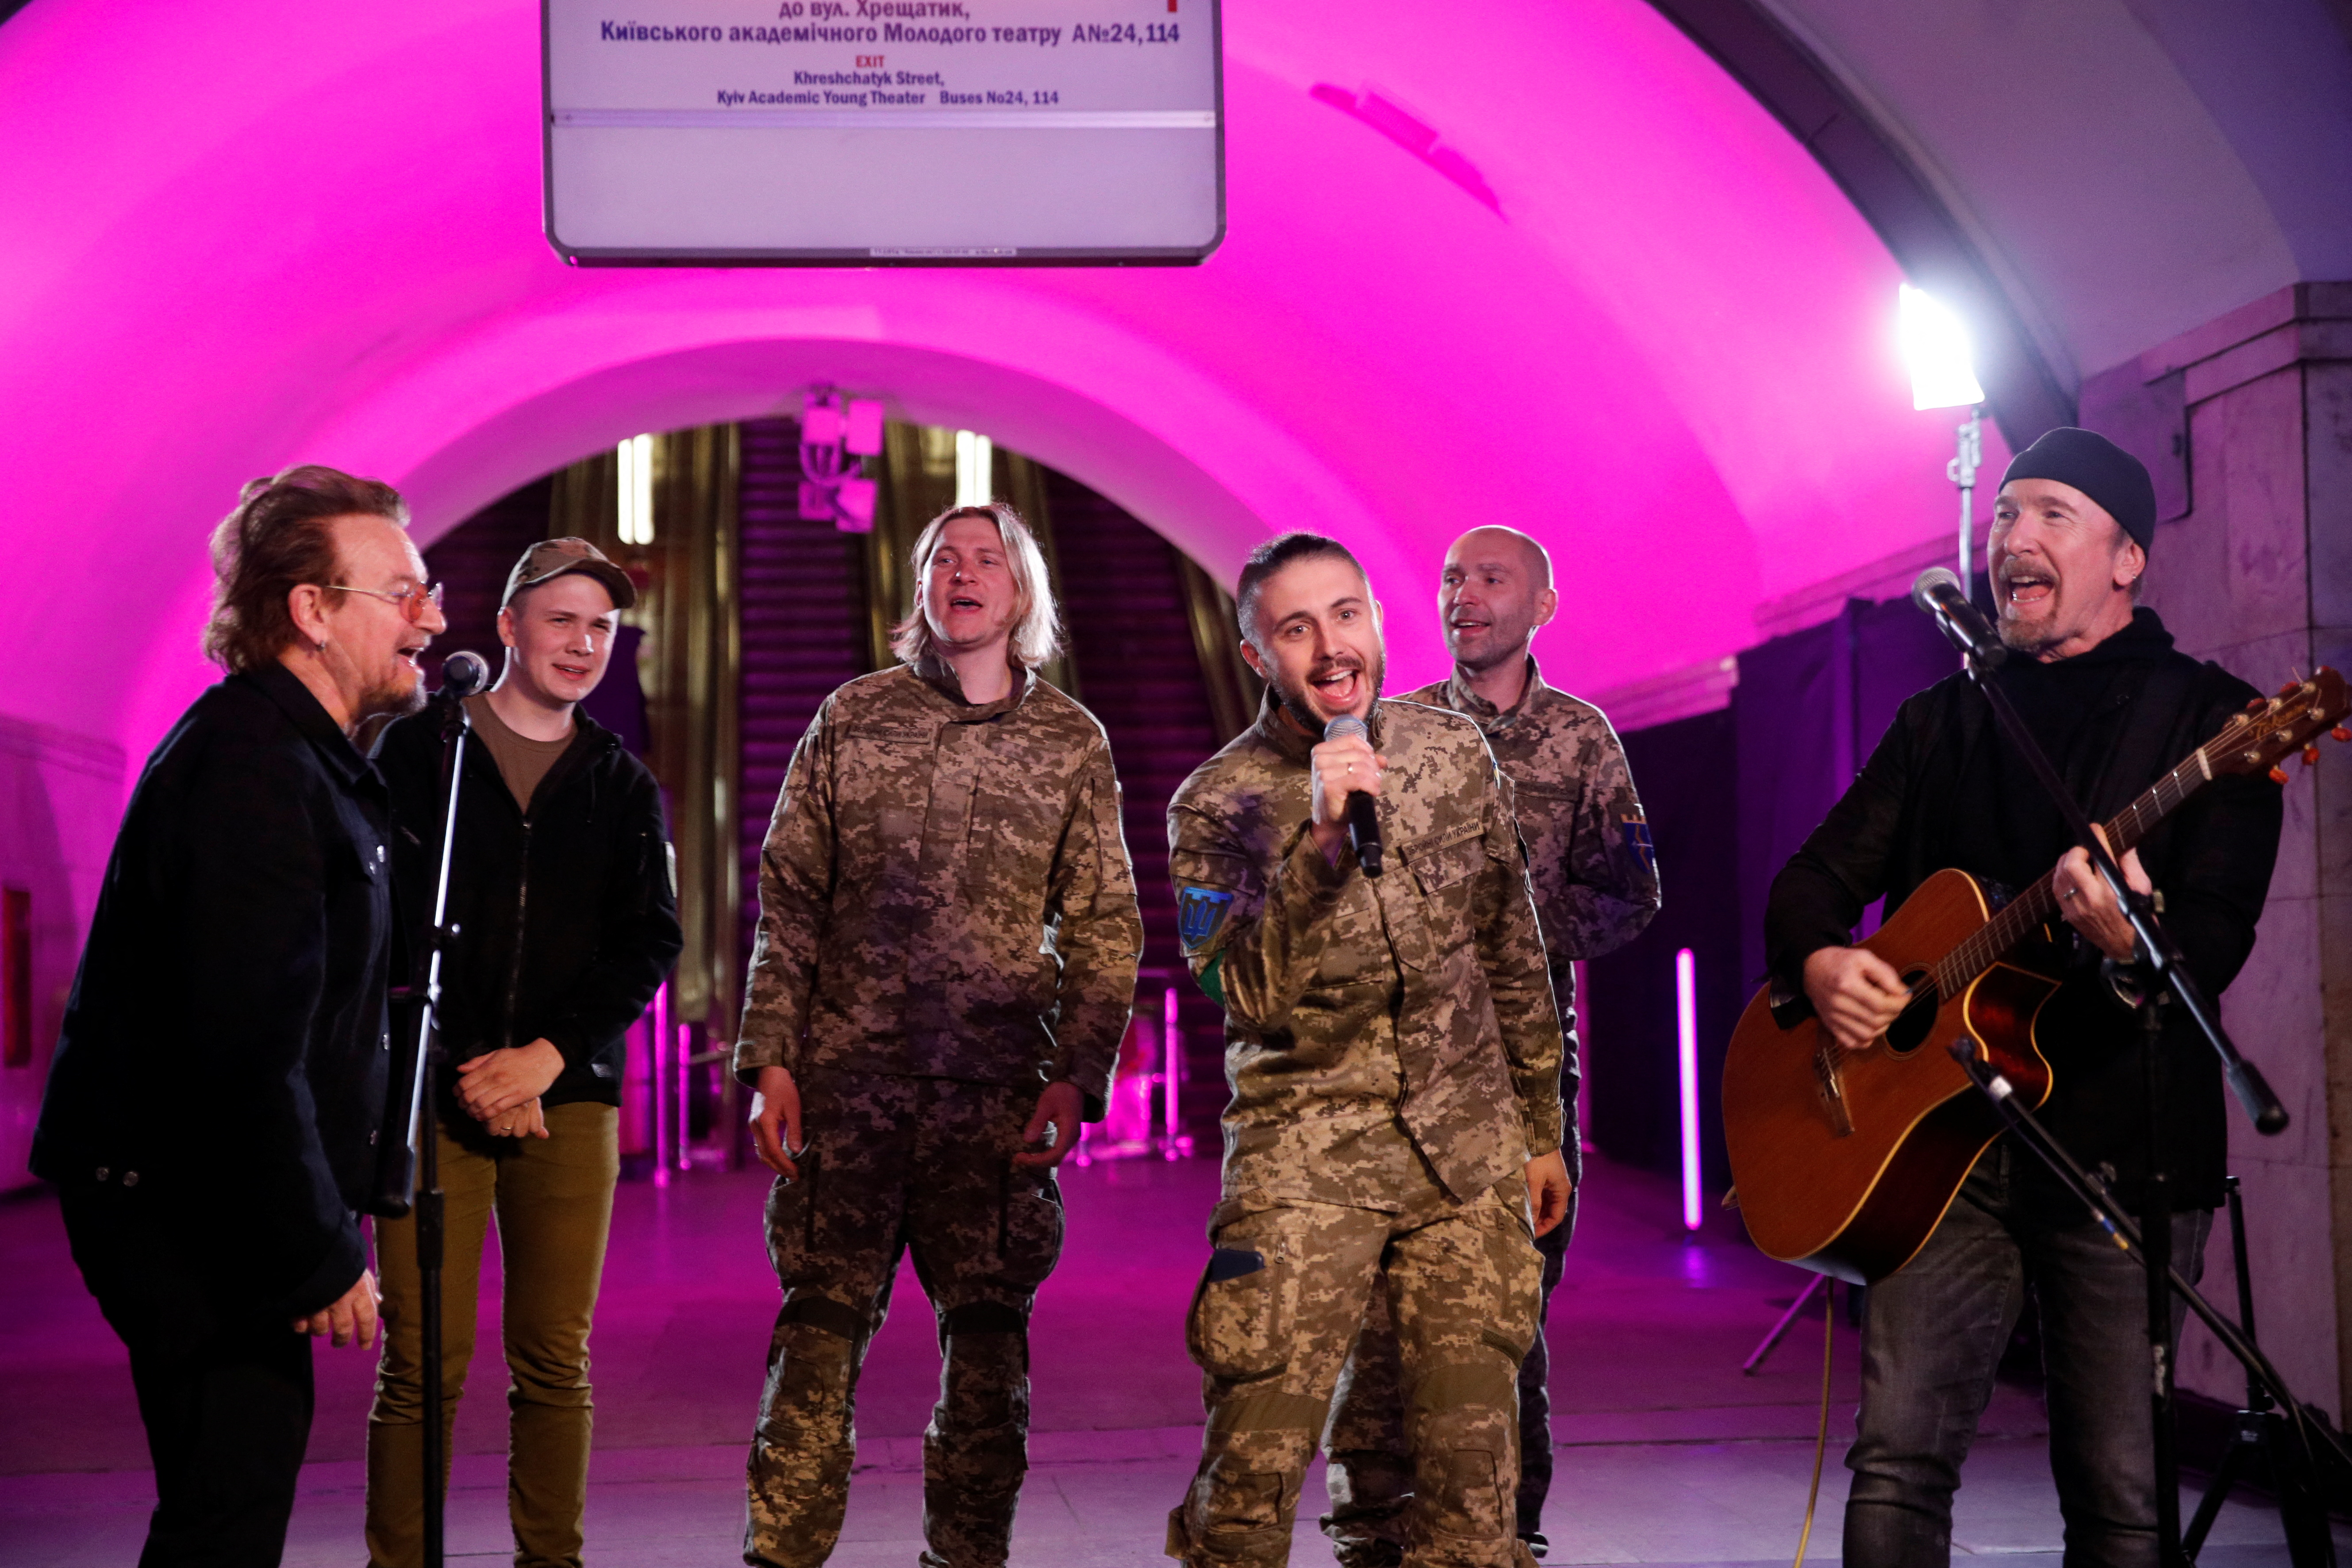 Demonio Terapia Interpretar U2's Bono gives 'freedom' concert in Kyiv metro | Reuters